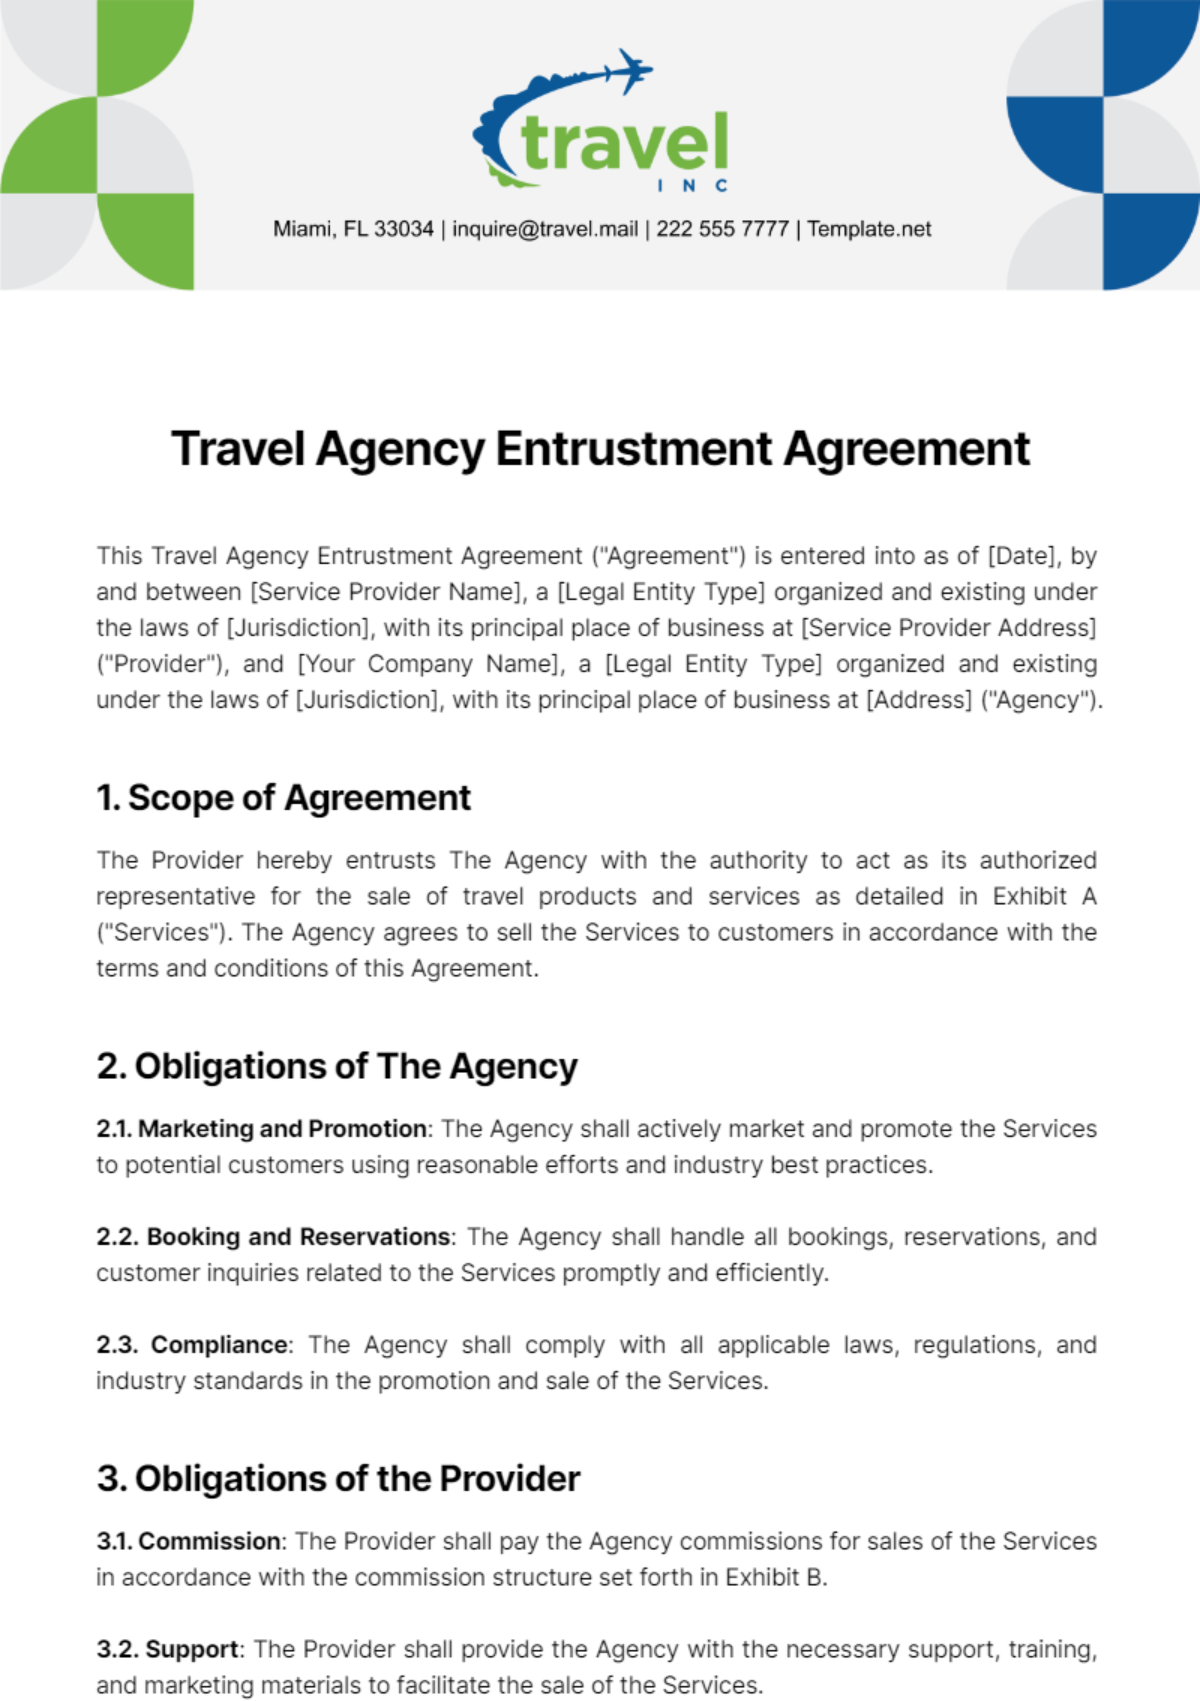 Free Travel Agency Entrustment Agreement Template